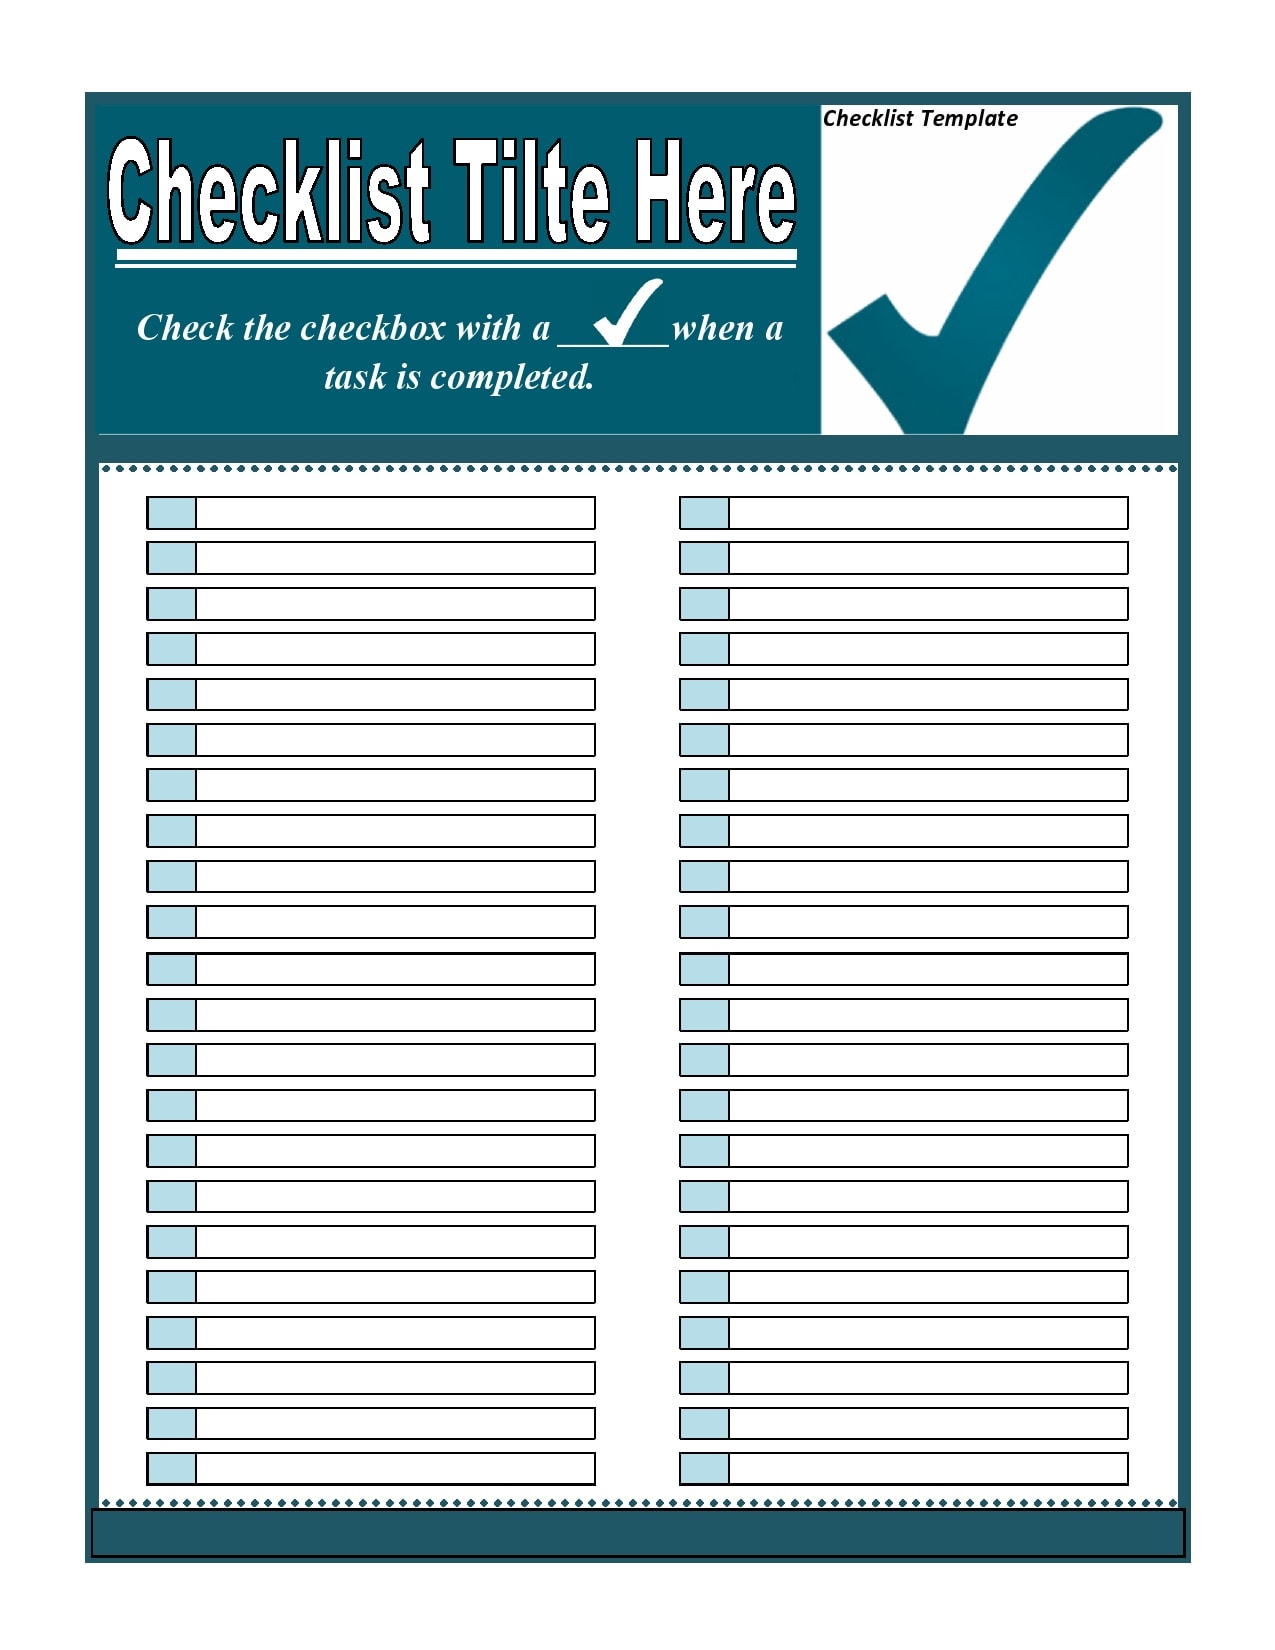 22 Free Checklist Templates (Word, Excel) - PrintableTemplates For Blank Checklist Template Word